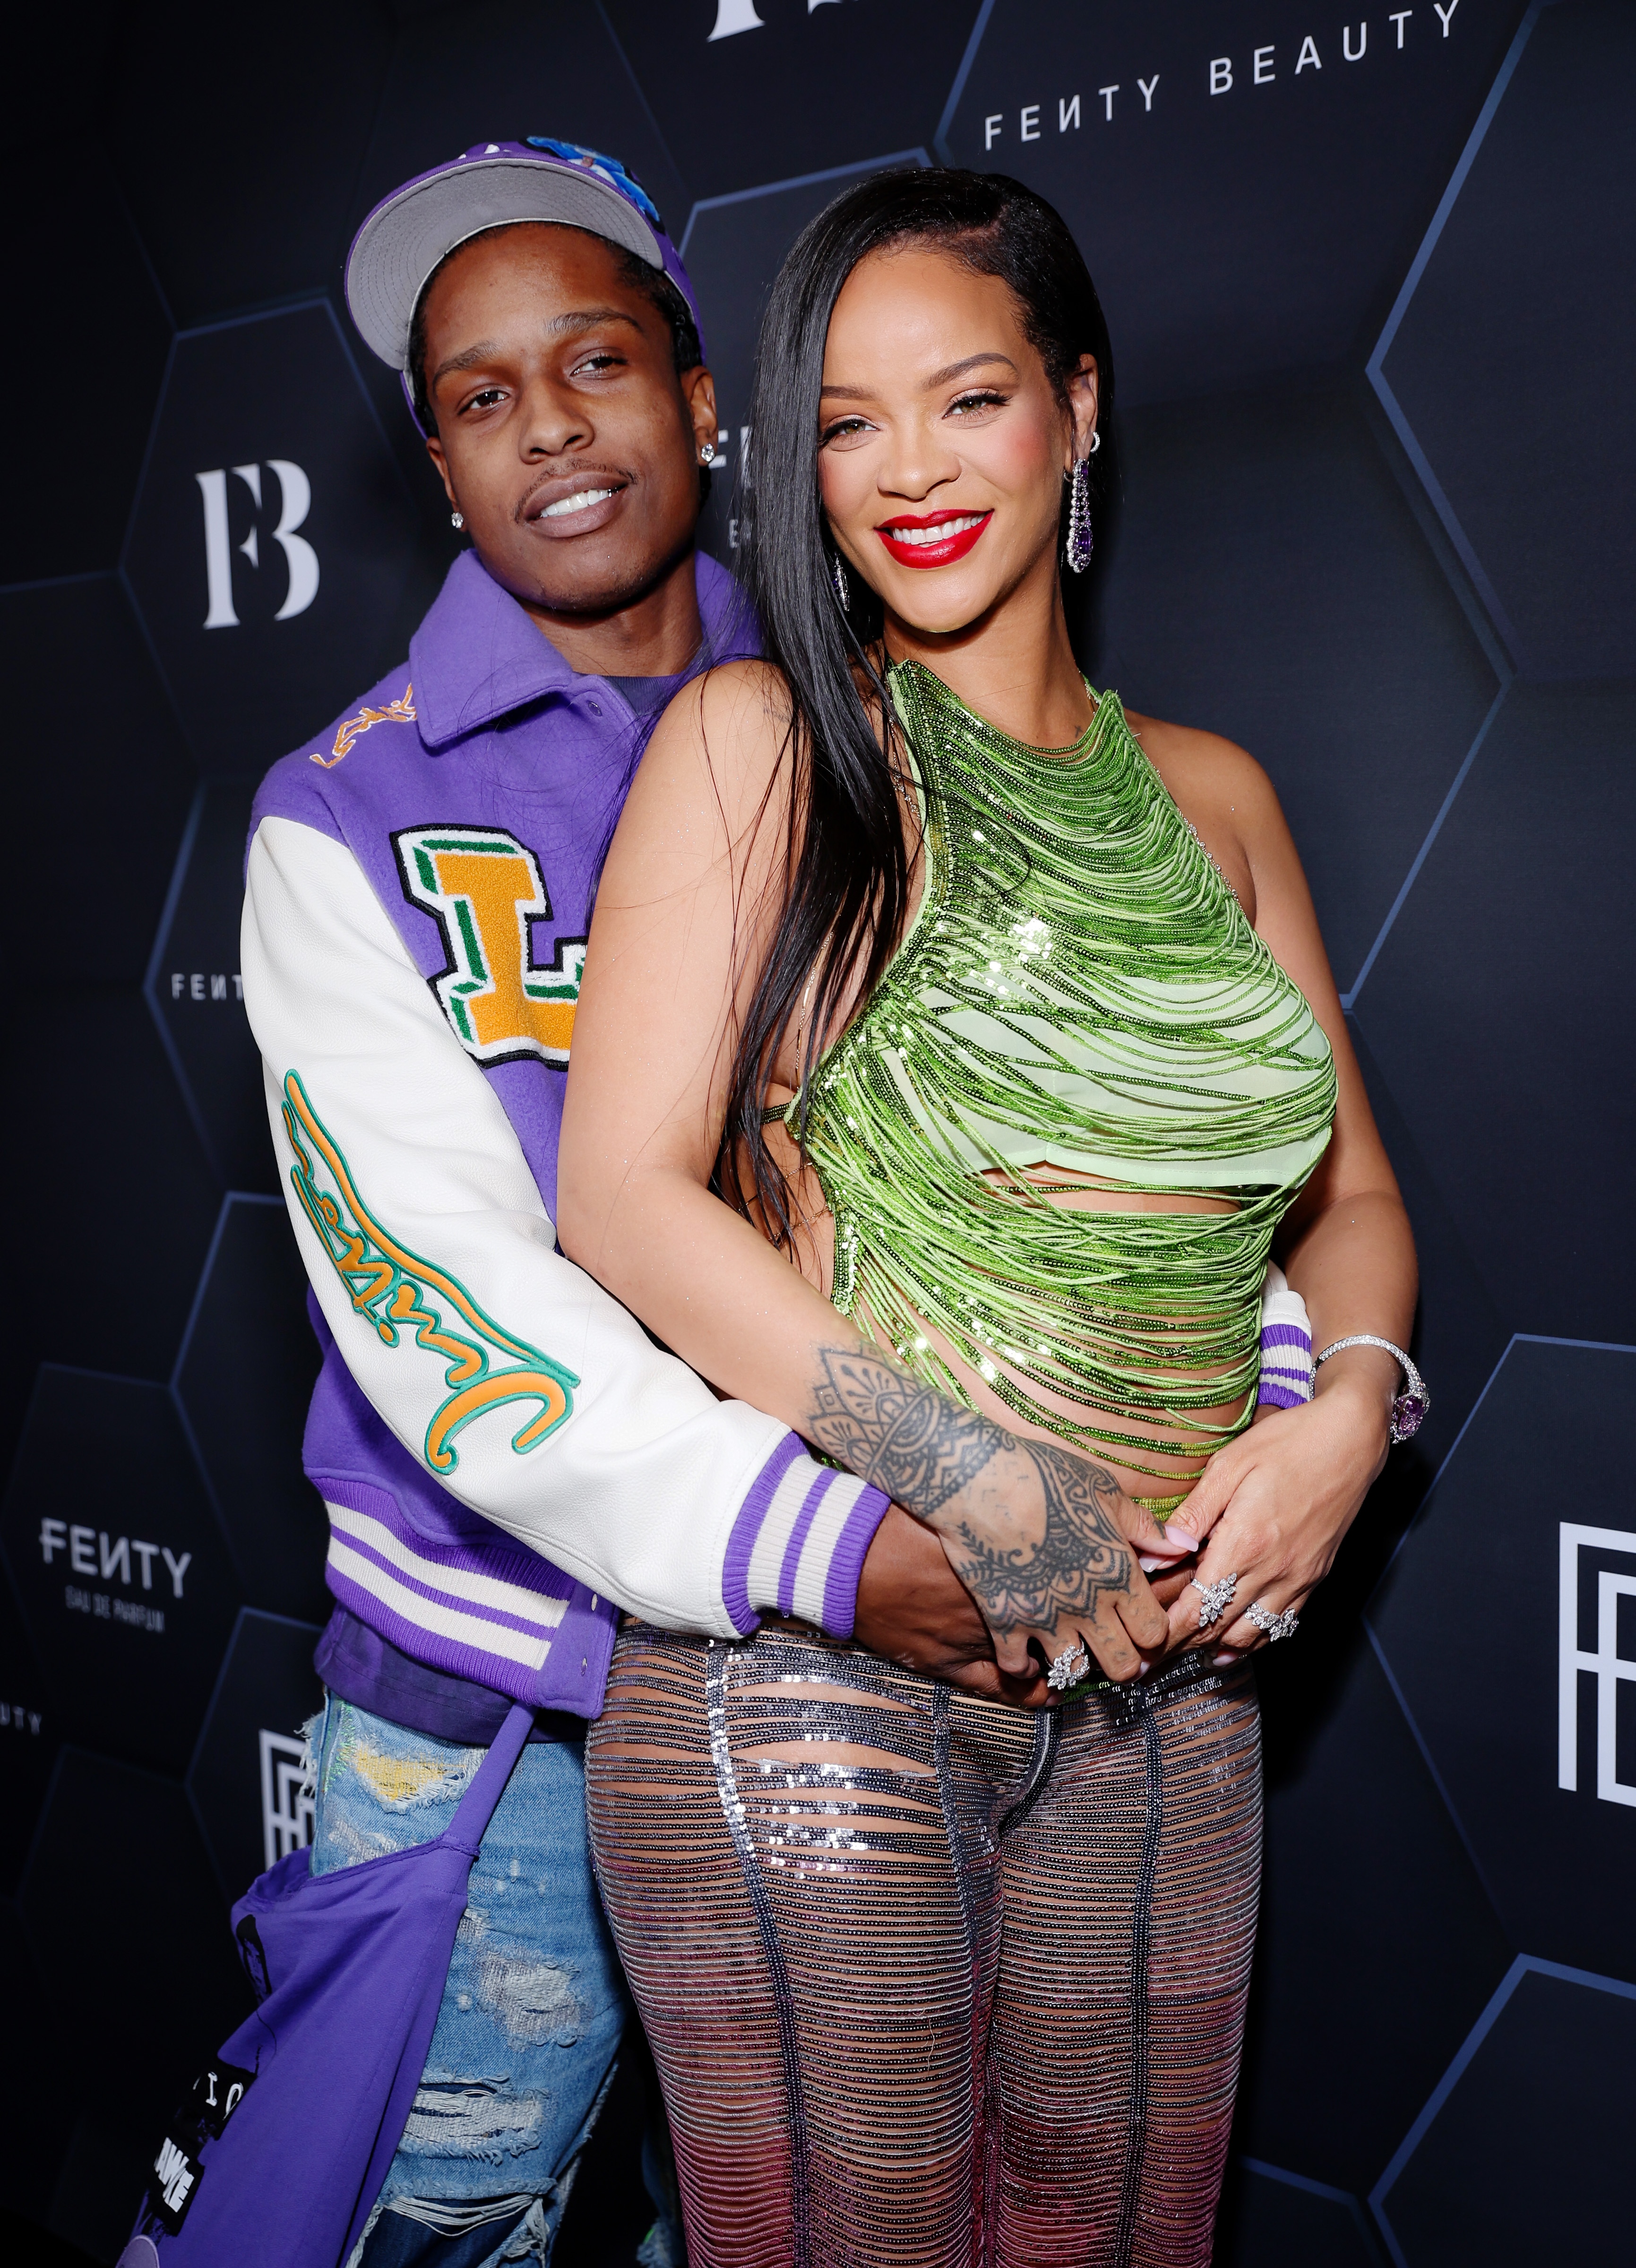 Rihanna shares two kids with her boyfriend A$AP Rocky